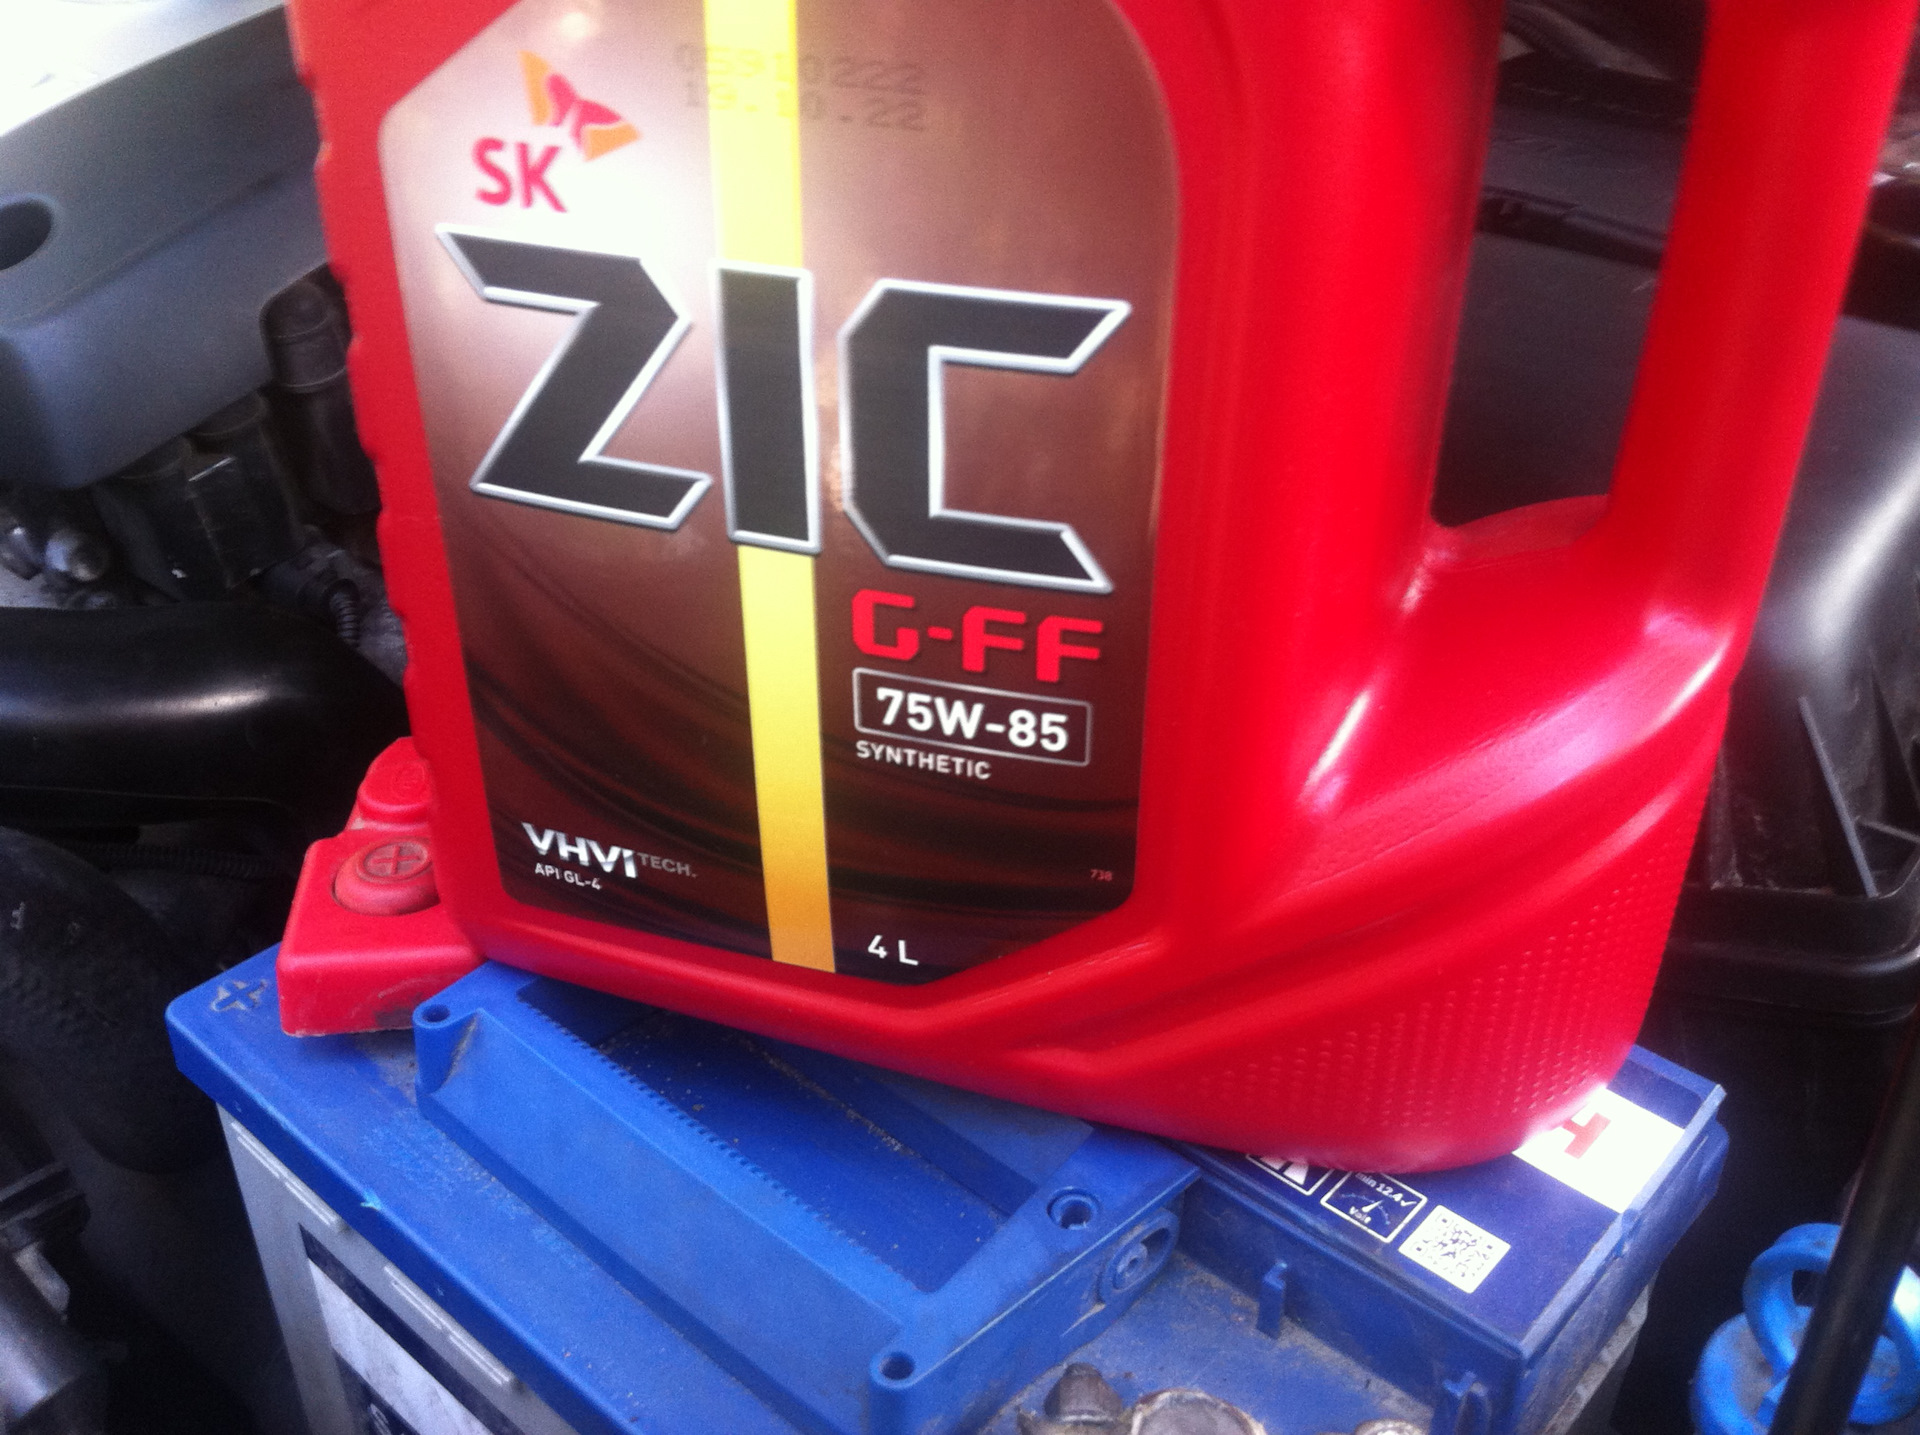 Zic g ff 75w85. ZIC G-FF 75w-85 артикул. ZIC 75w85 g-FF 20 литров. Масло зик 75w85 g-FF Рено.